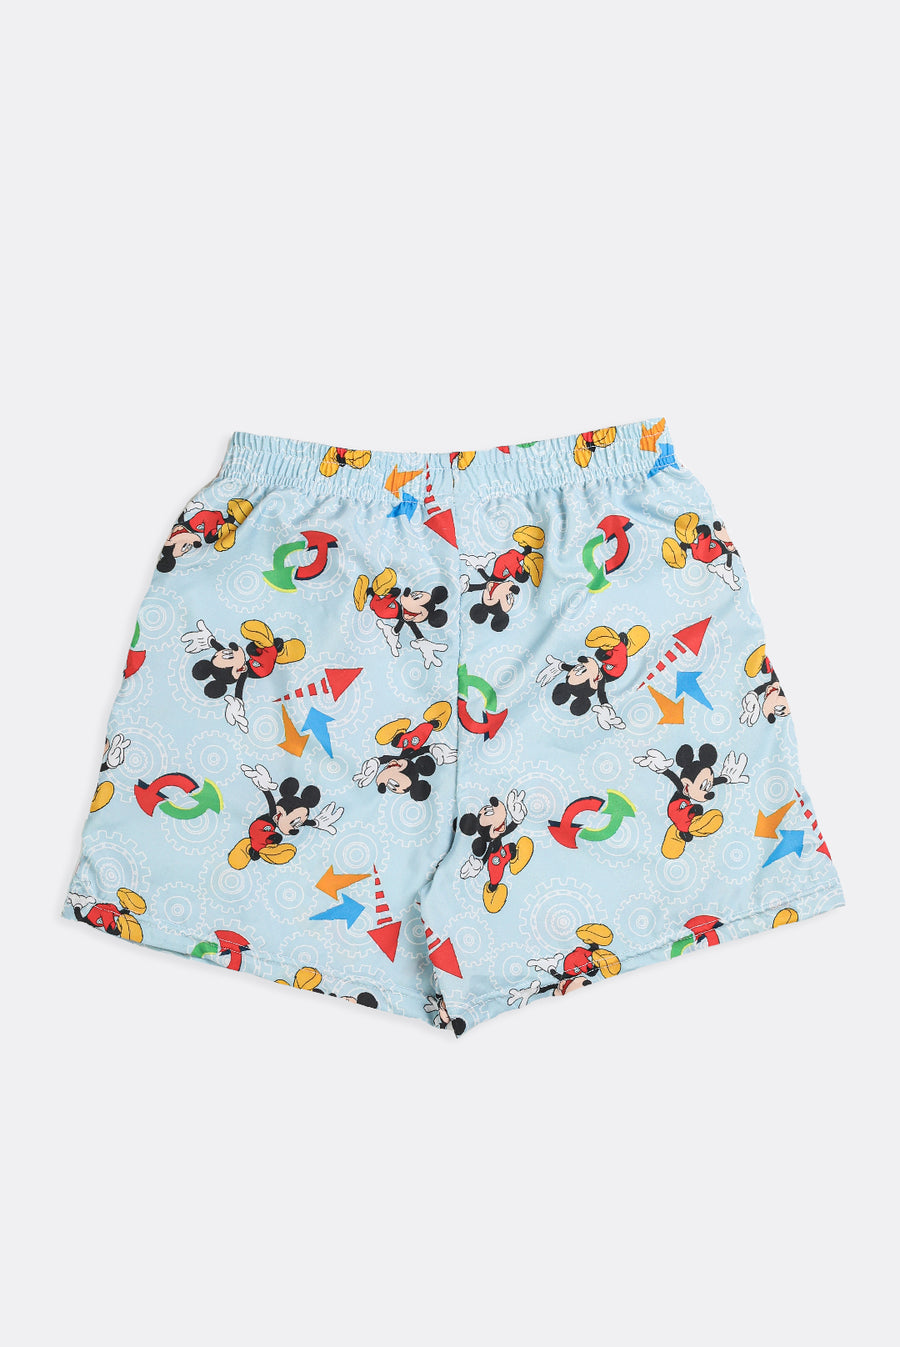 Unisex Rework Mickey Mouse Boxer Shorts - XS, S